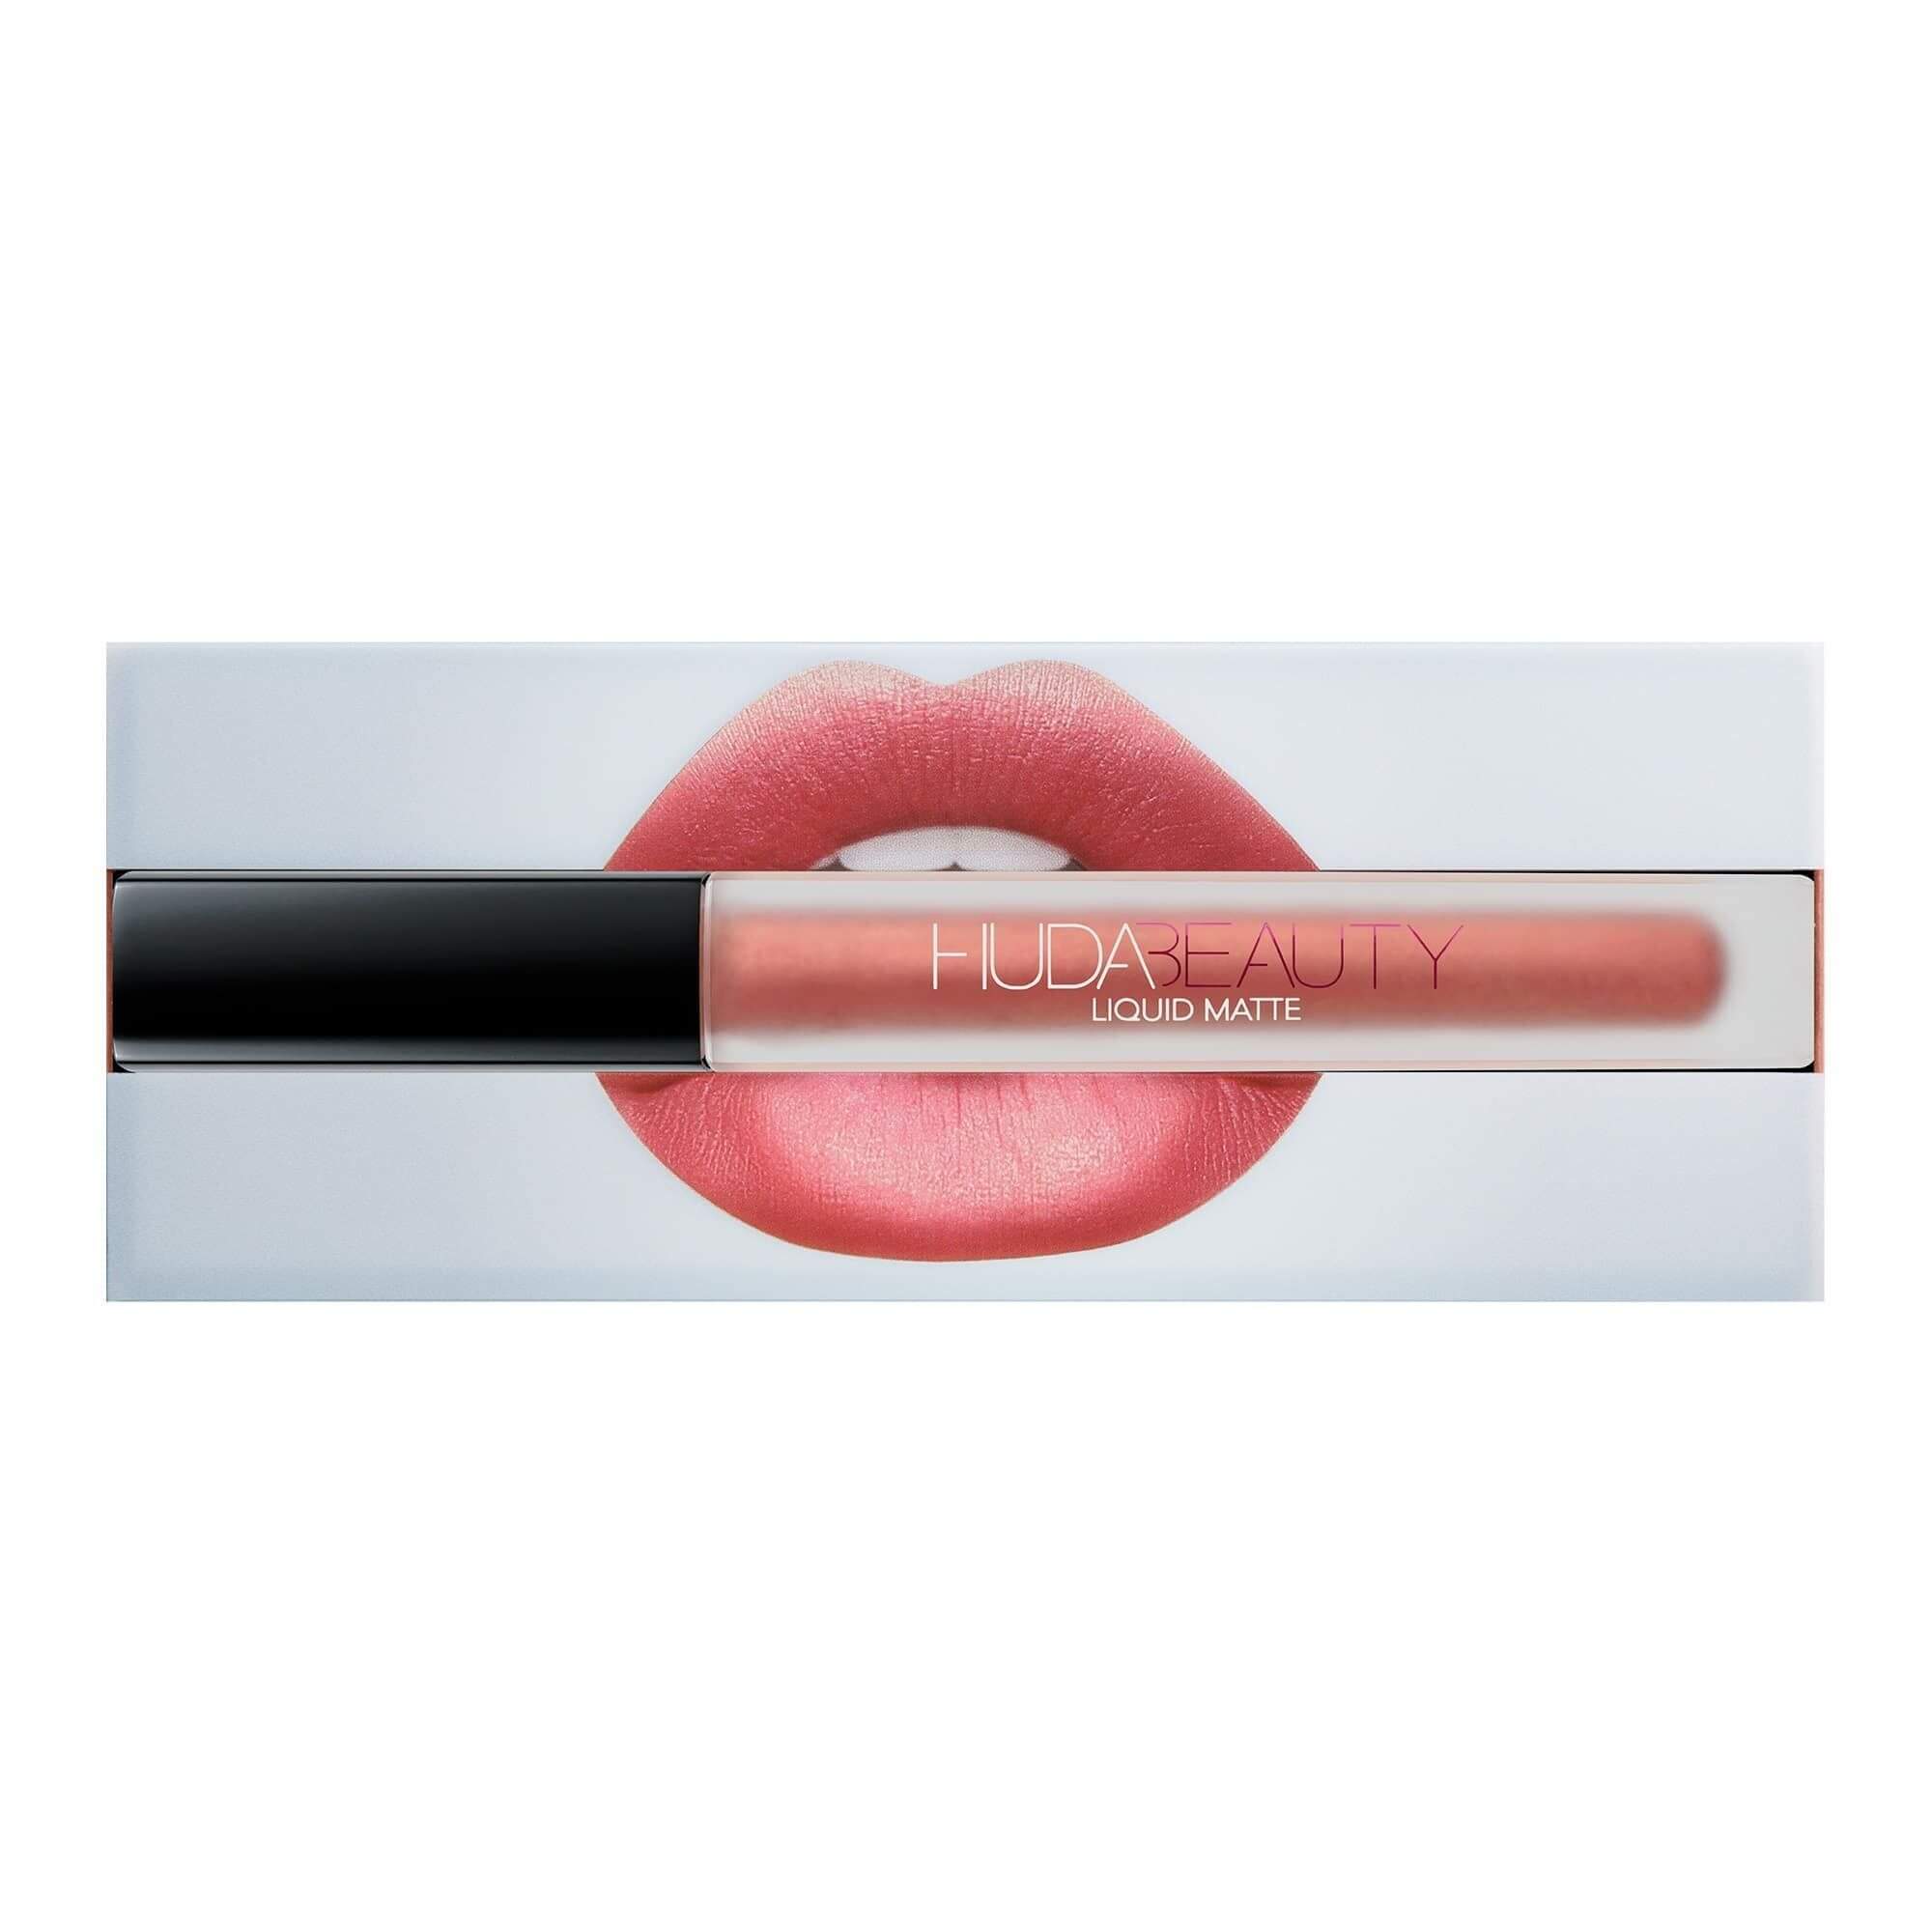 Huda Beauty Liquid Matte lipstick ( Socialite)